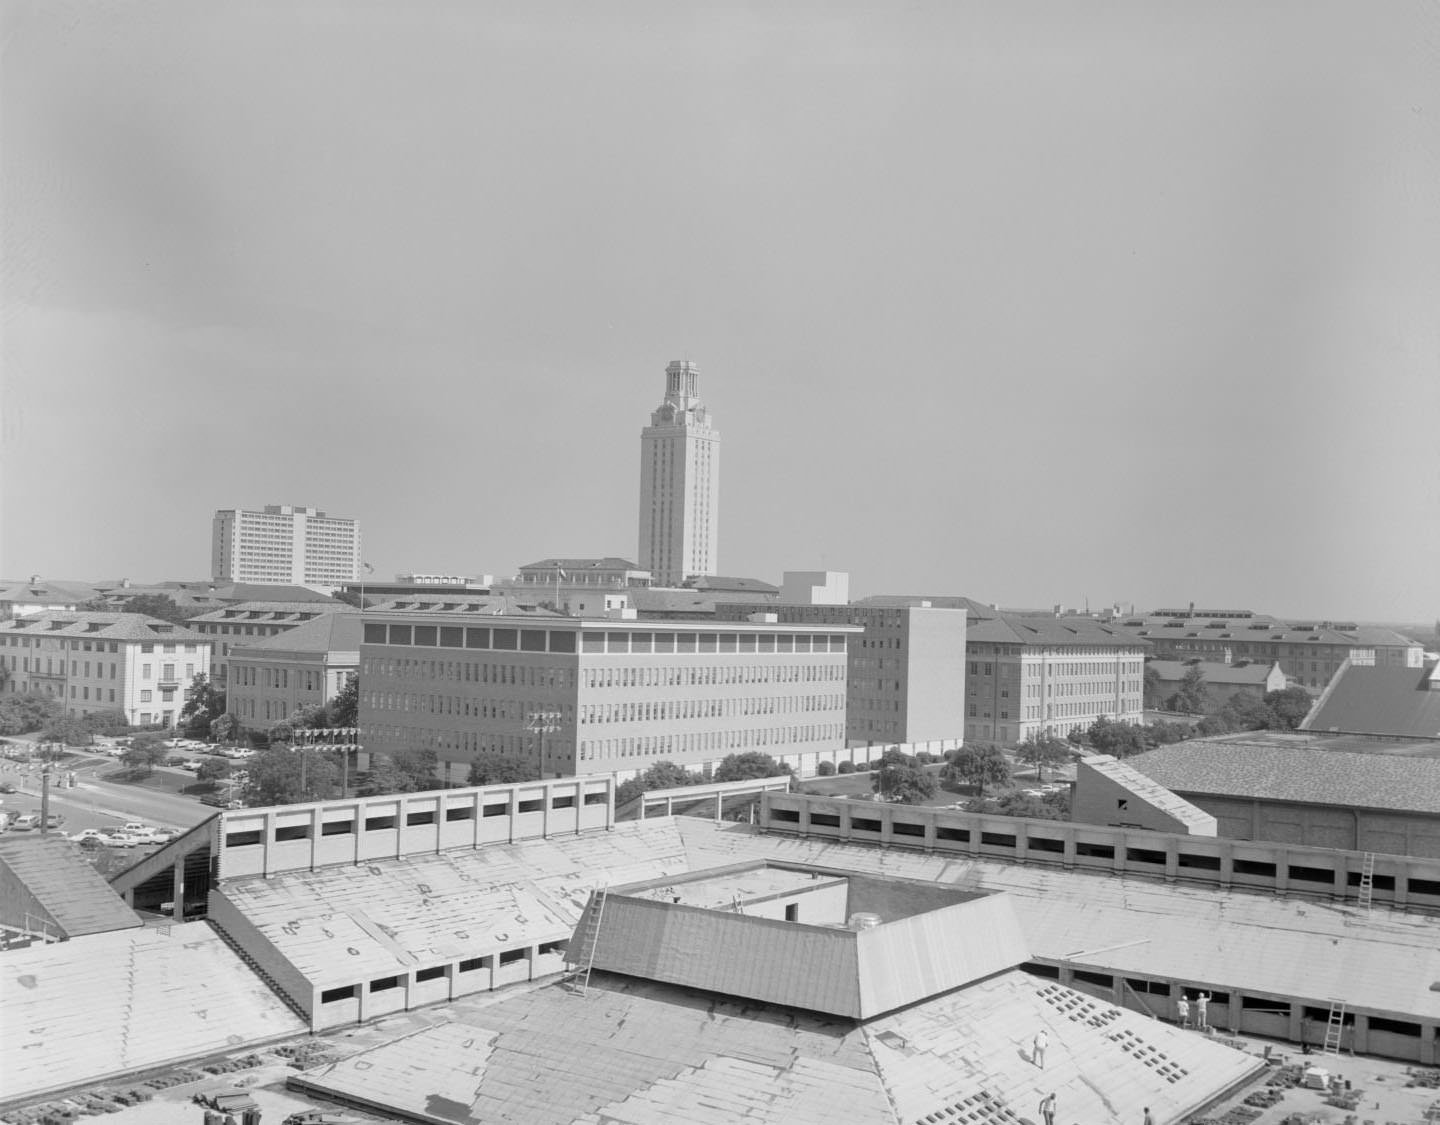 University of Texas Tower, 1969